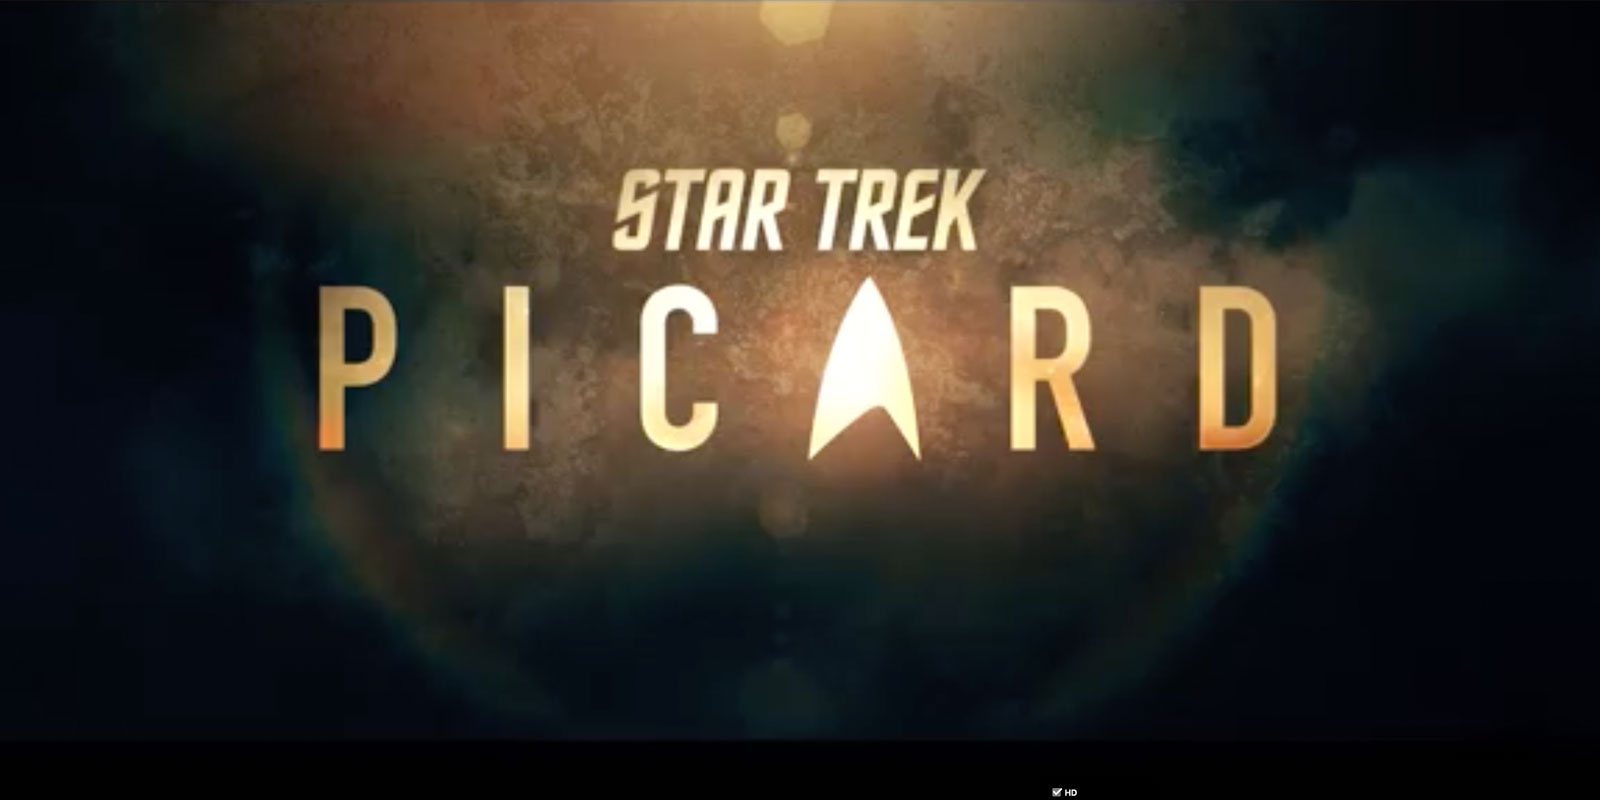 Star Trek: Picard logo